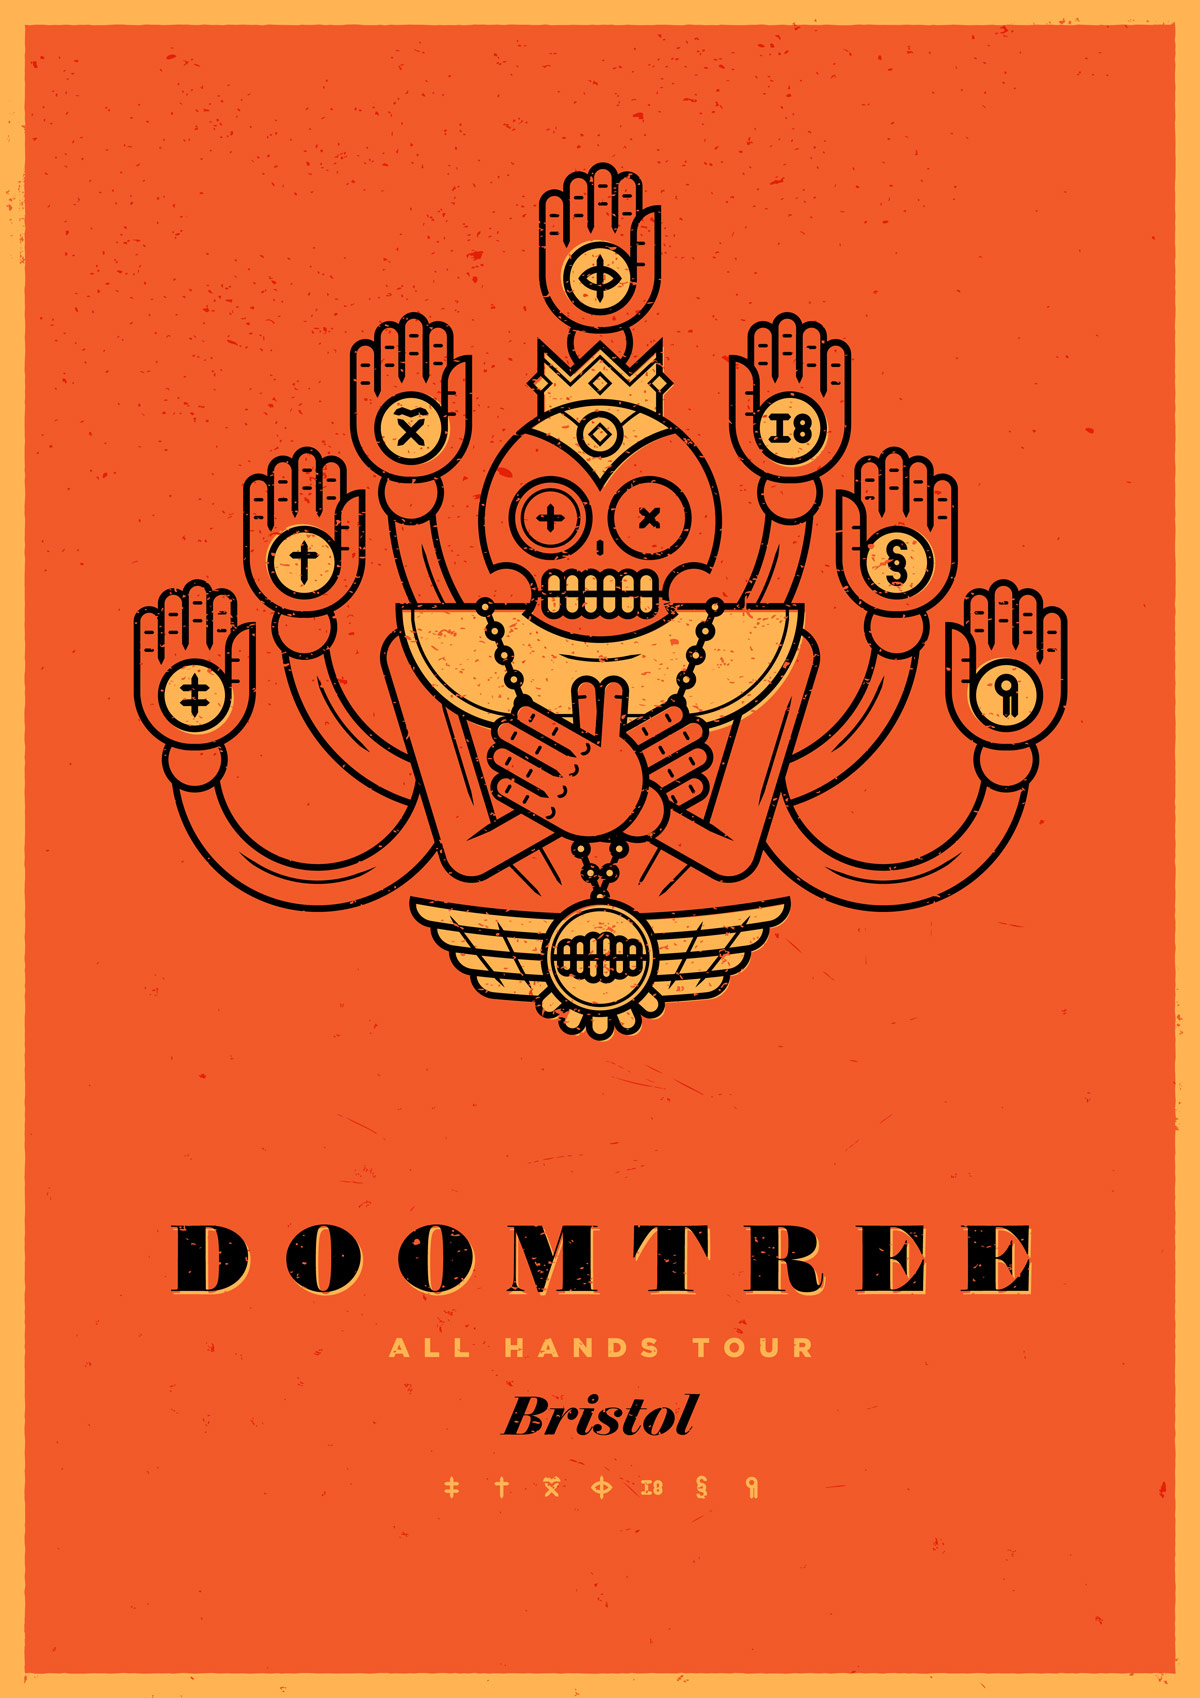 Doomtree poster illustration, personal work